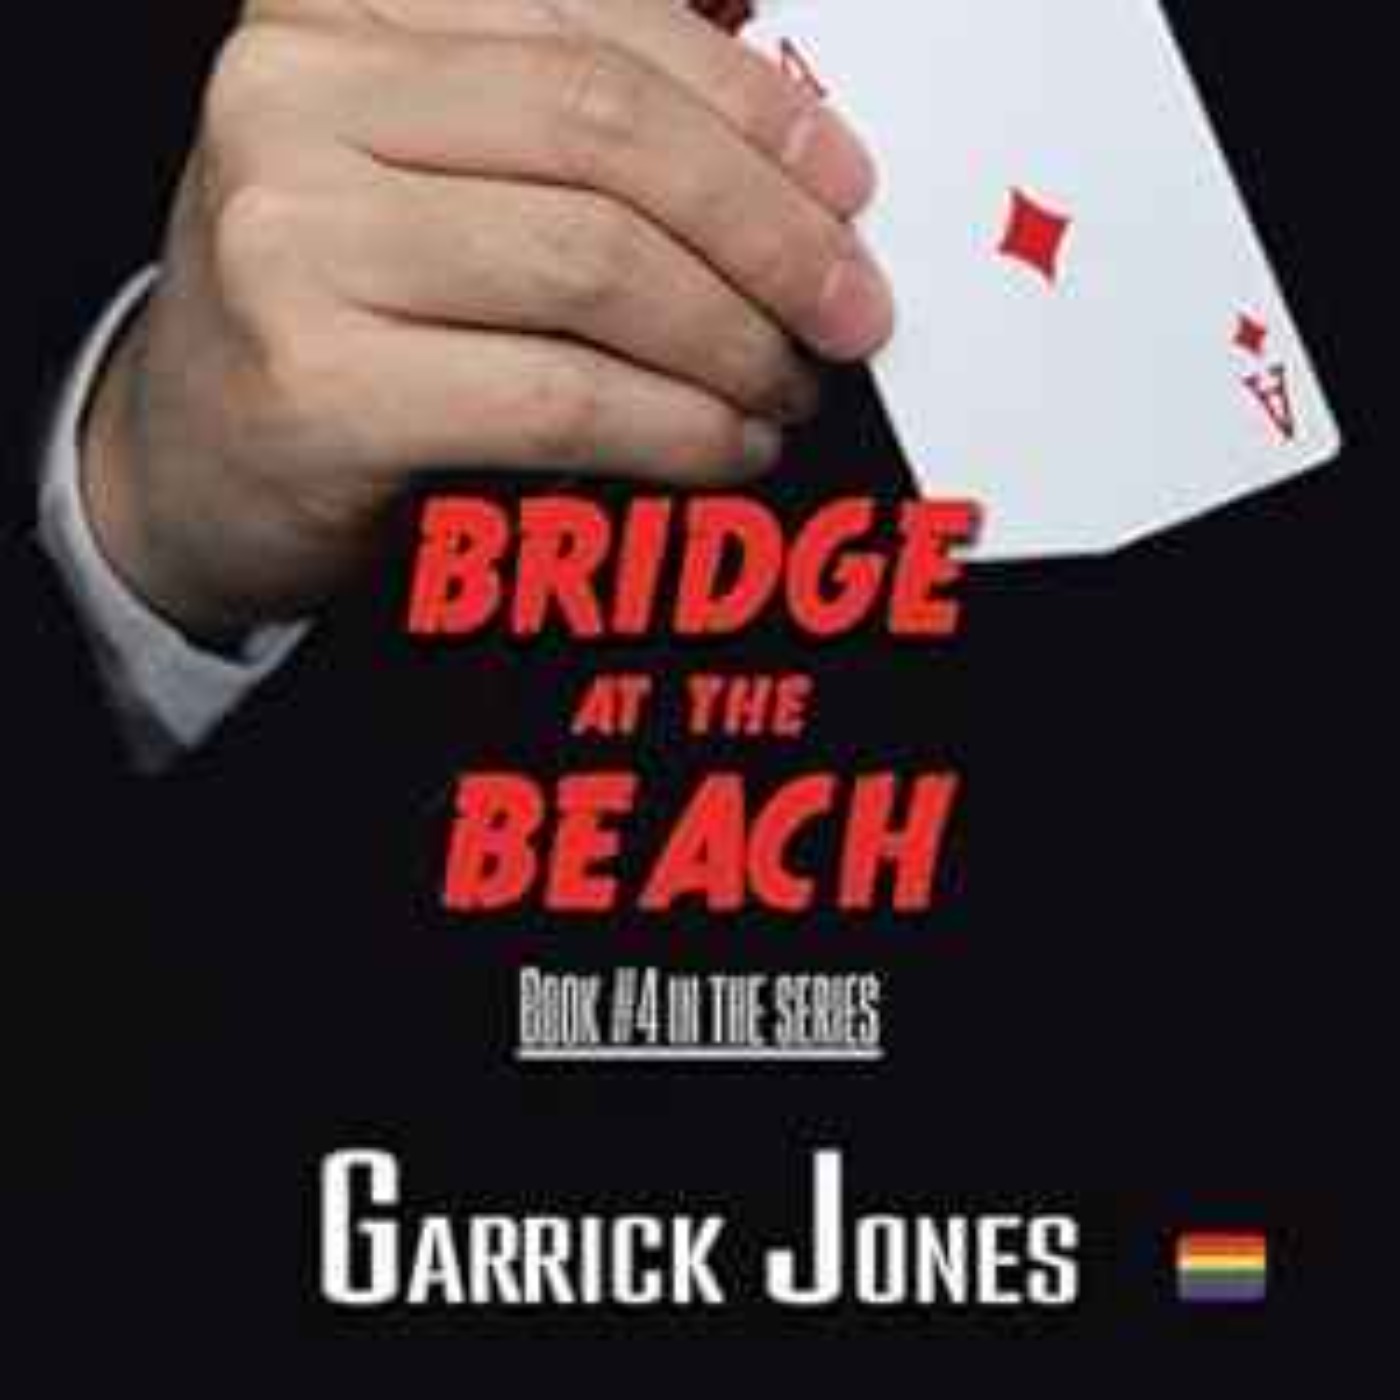 cover art for Garrick Jones - Bridge at the beach